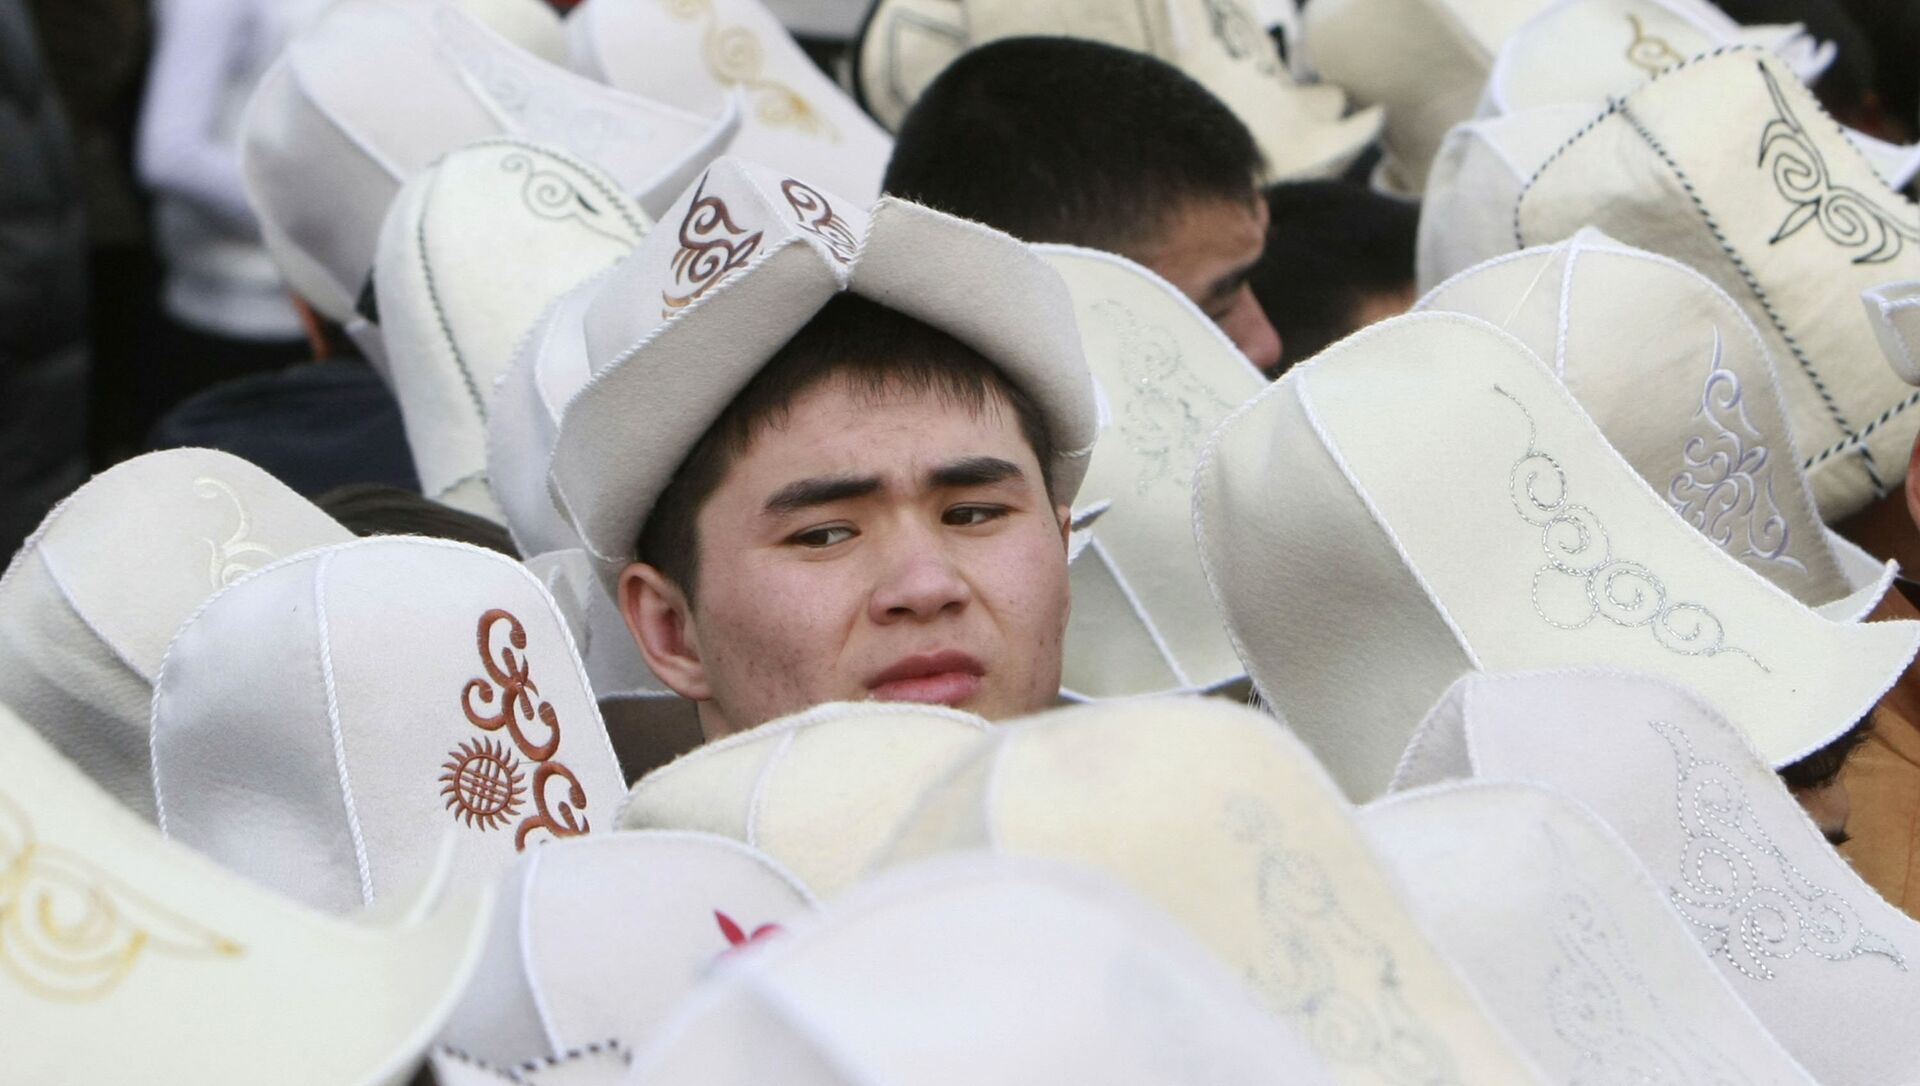 Шапка у киргизов